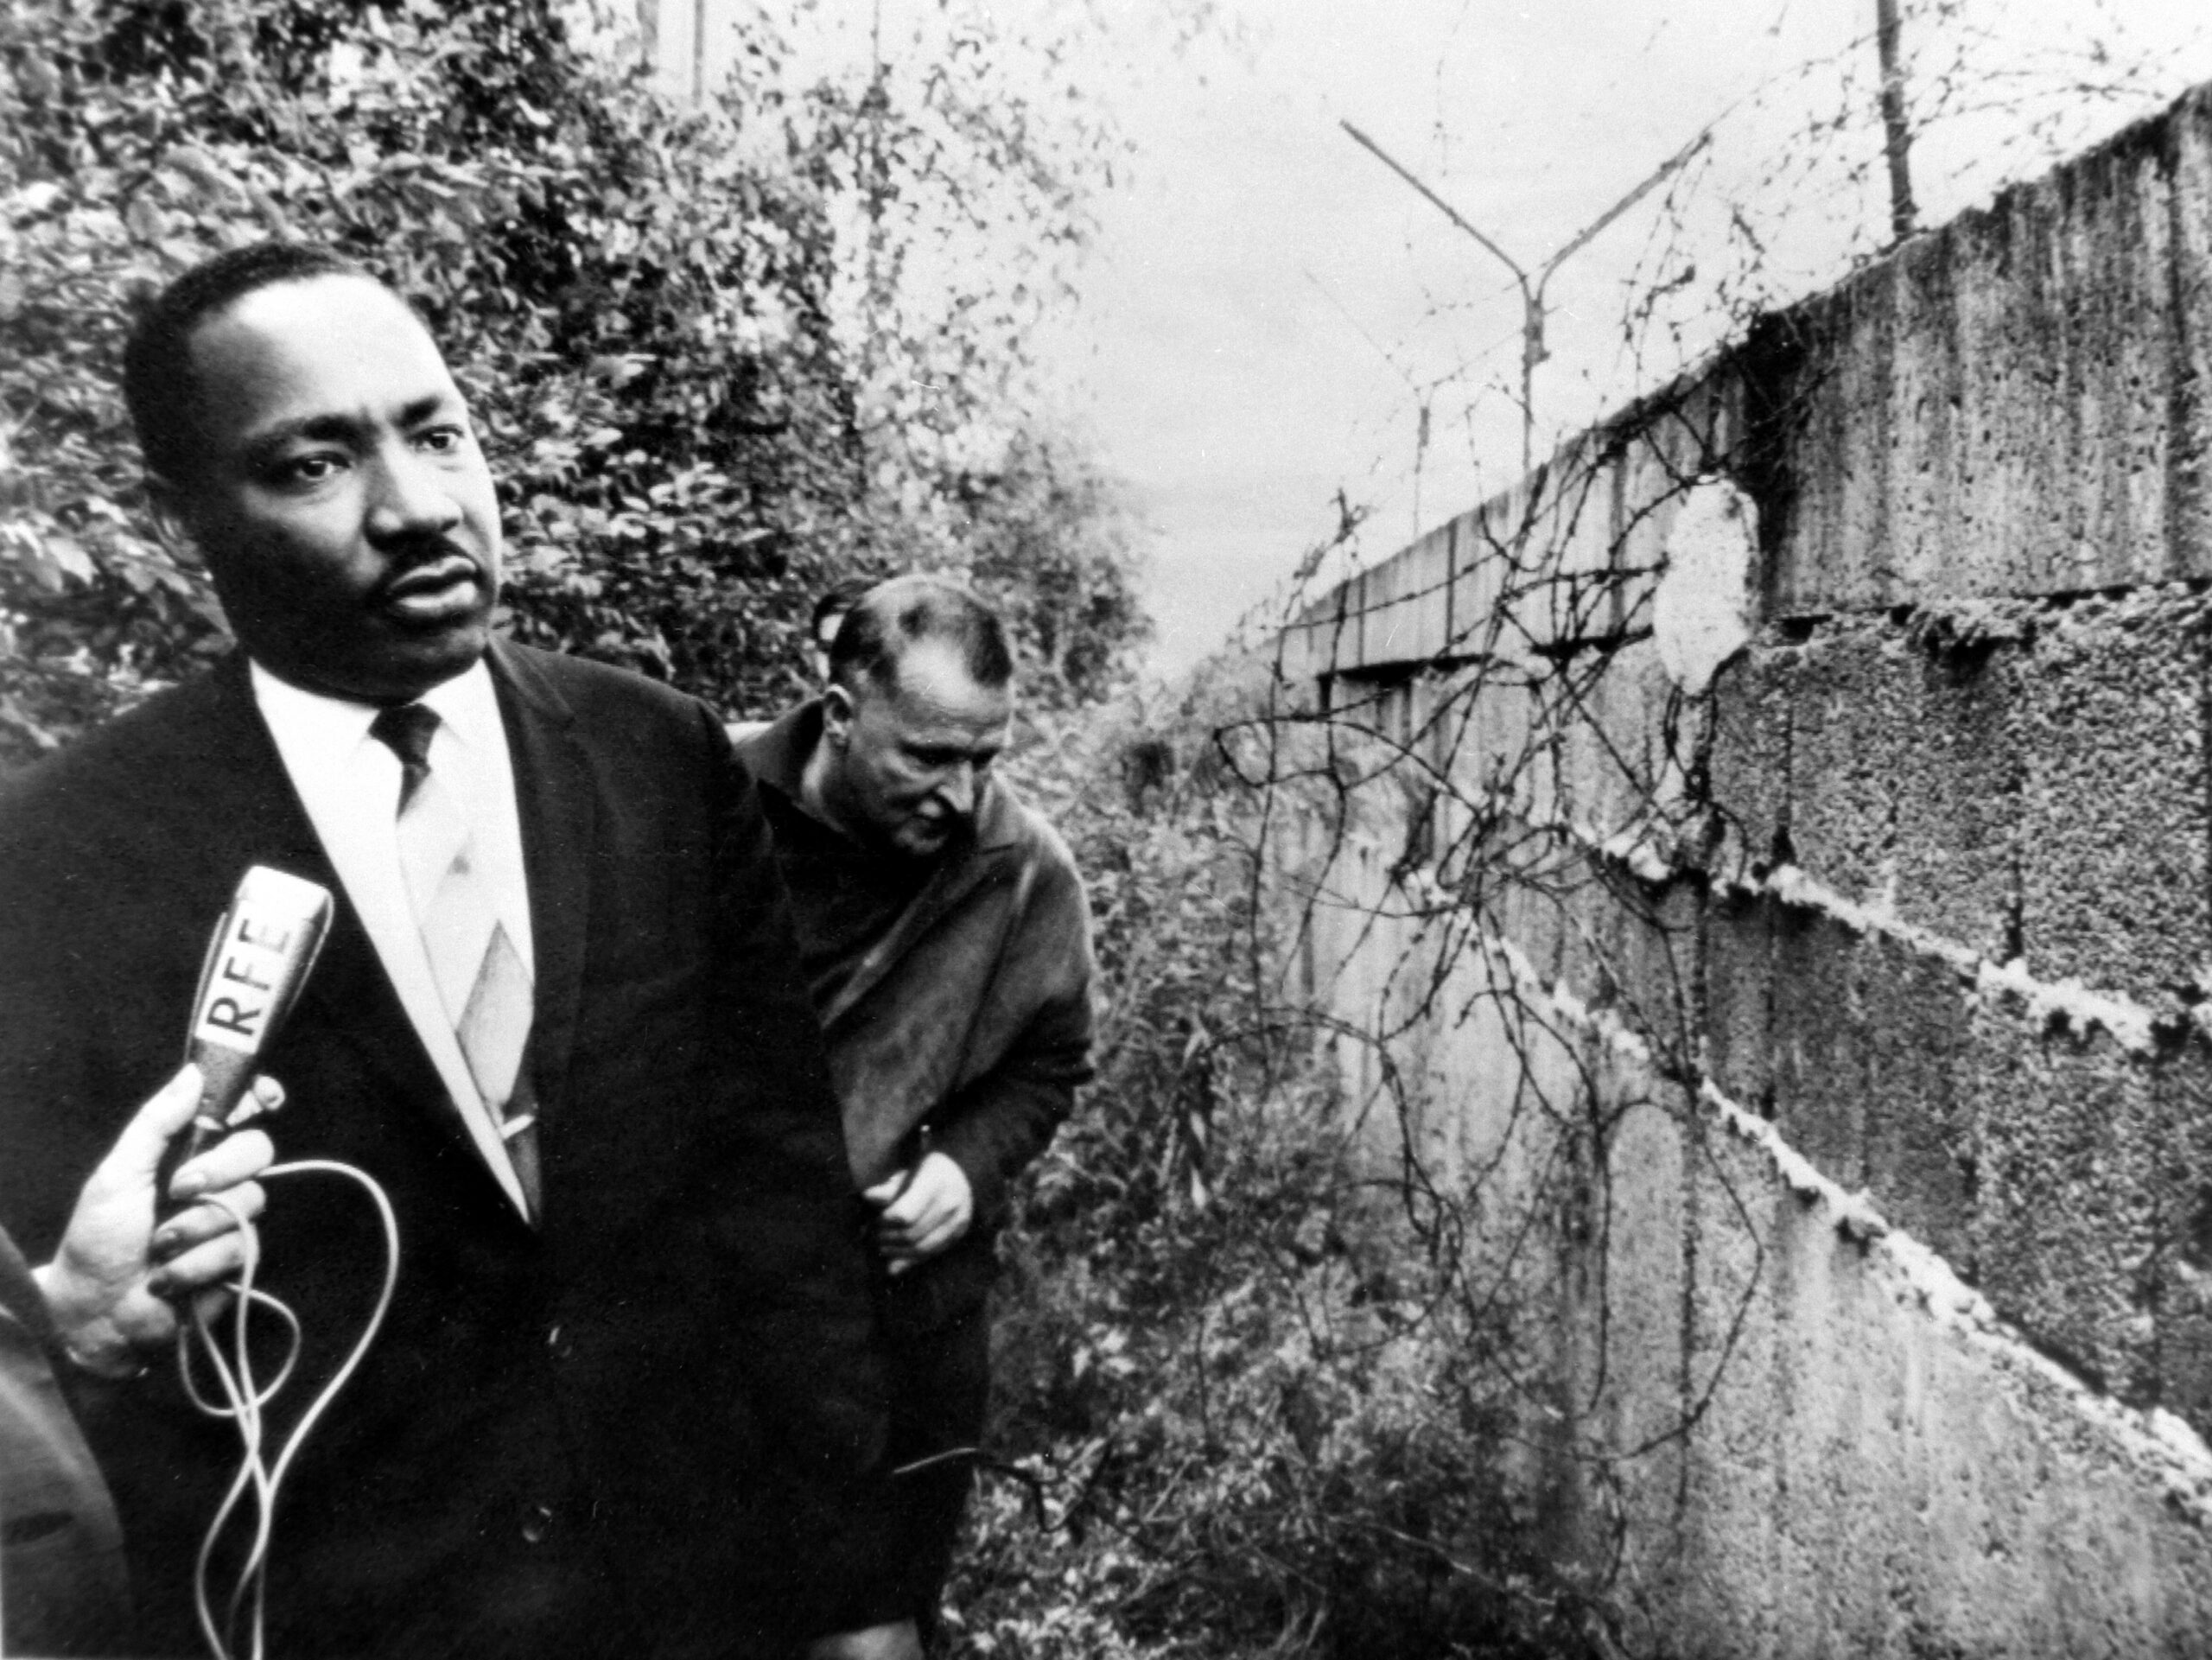 Berlin 1964: Martin Luther King an der Berliner Mauer. Foto: Imago/Topfoto/United Archives International